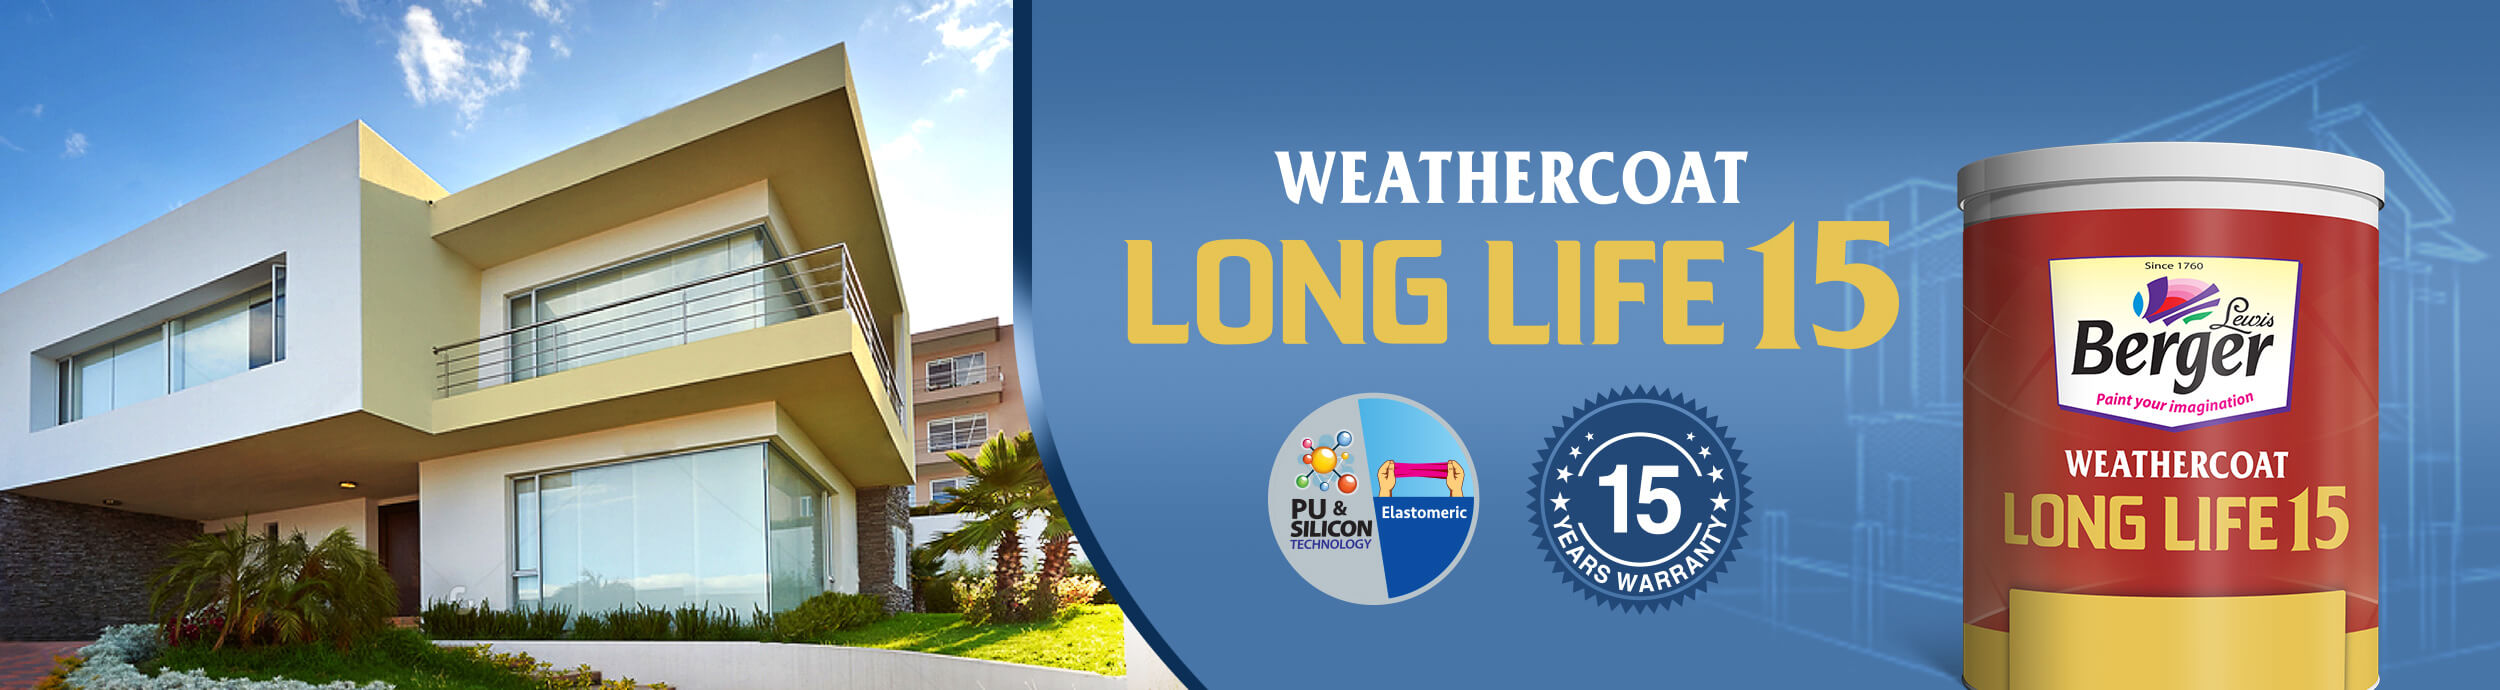 WeatherCoat Long Life 15 Banner